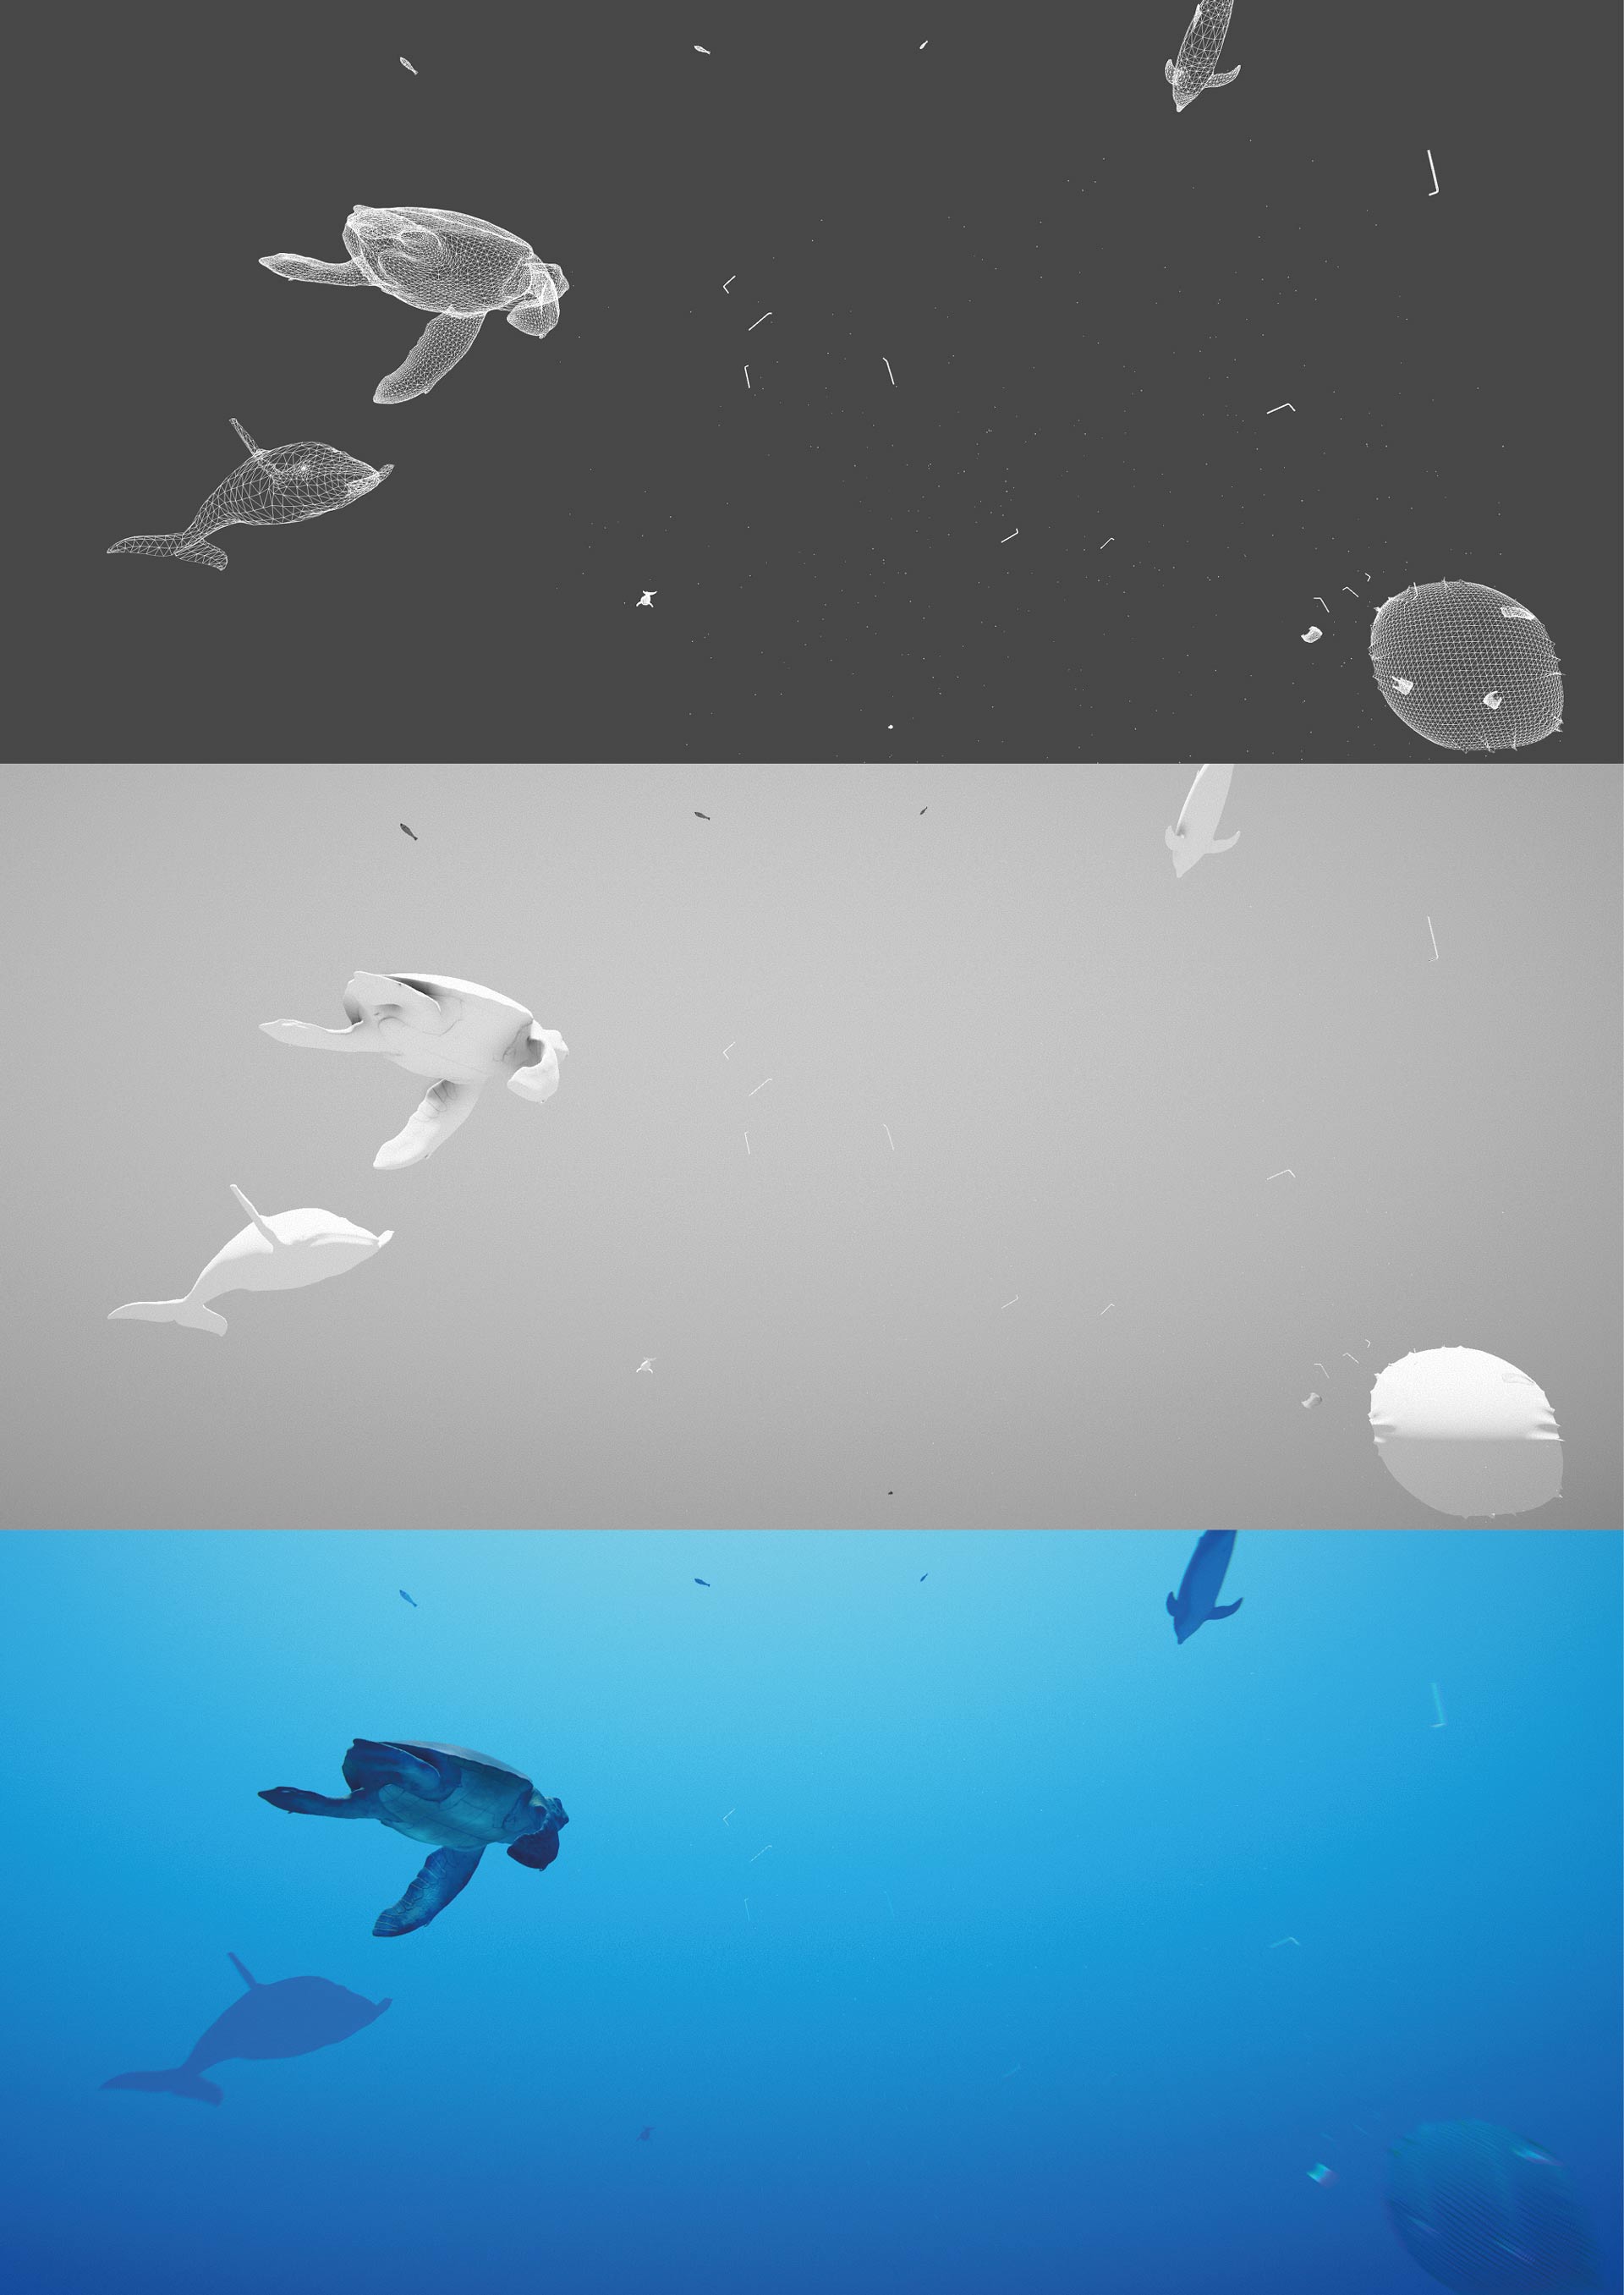 Design breakdown of Atlantis virtual reality educational application